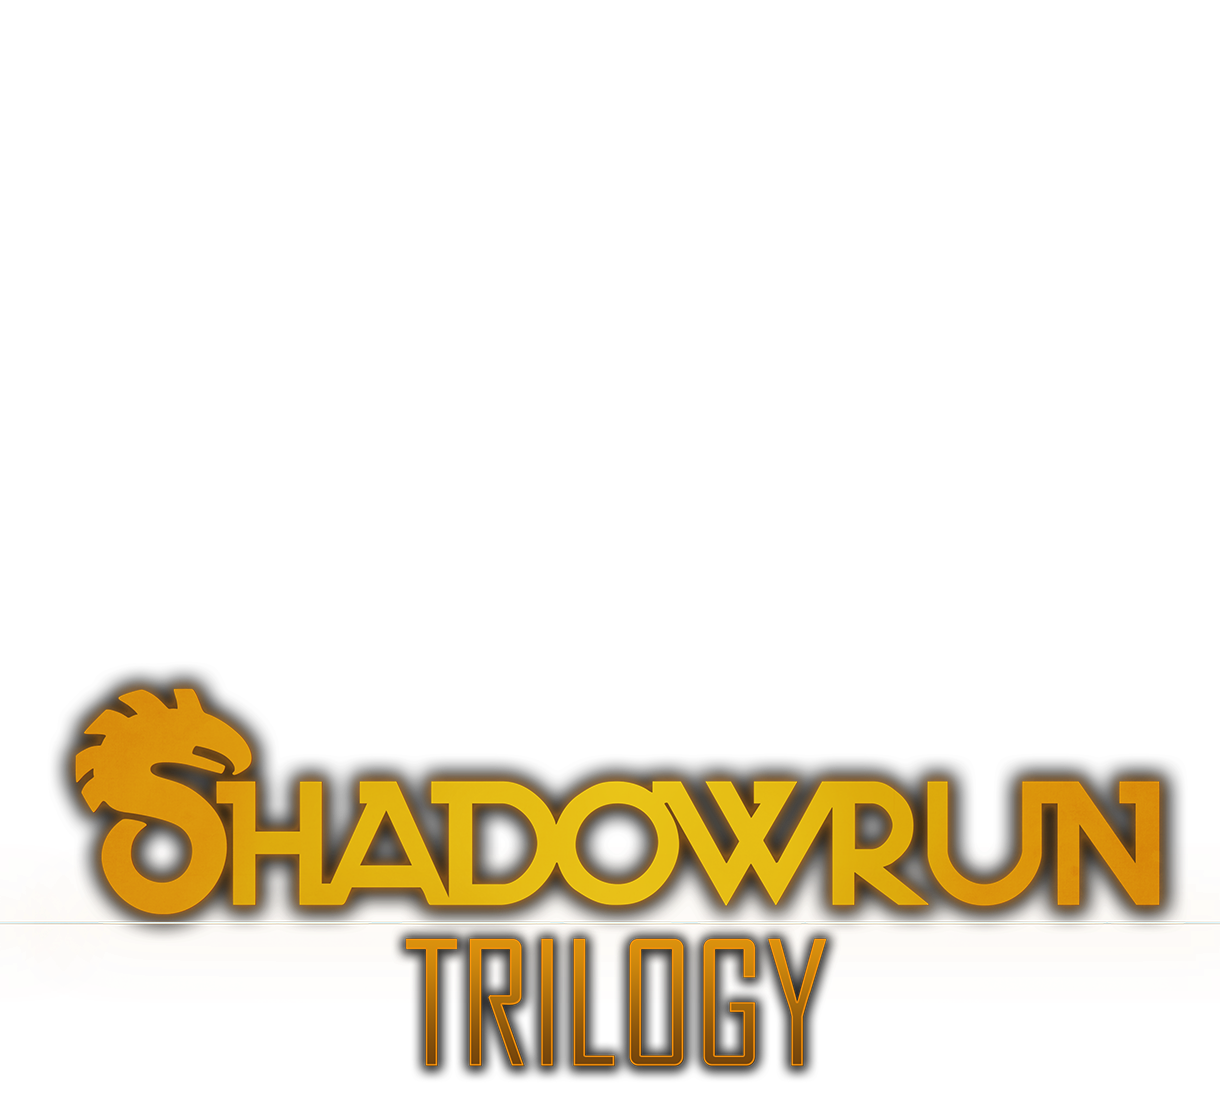 Shadowrun: Trilogy